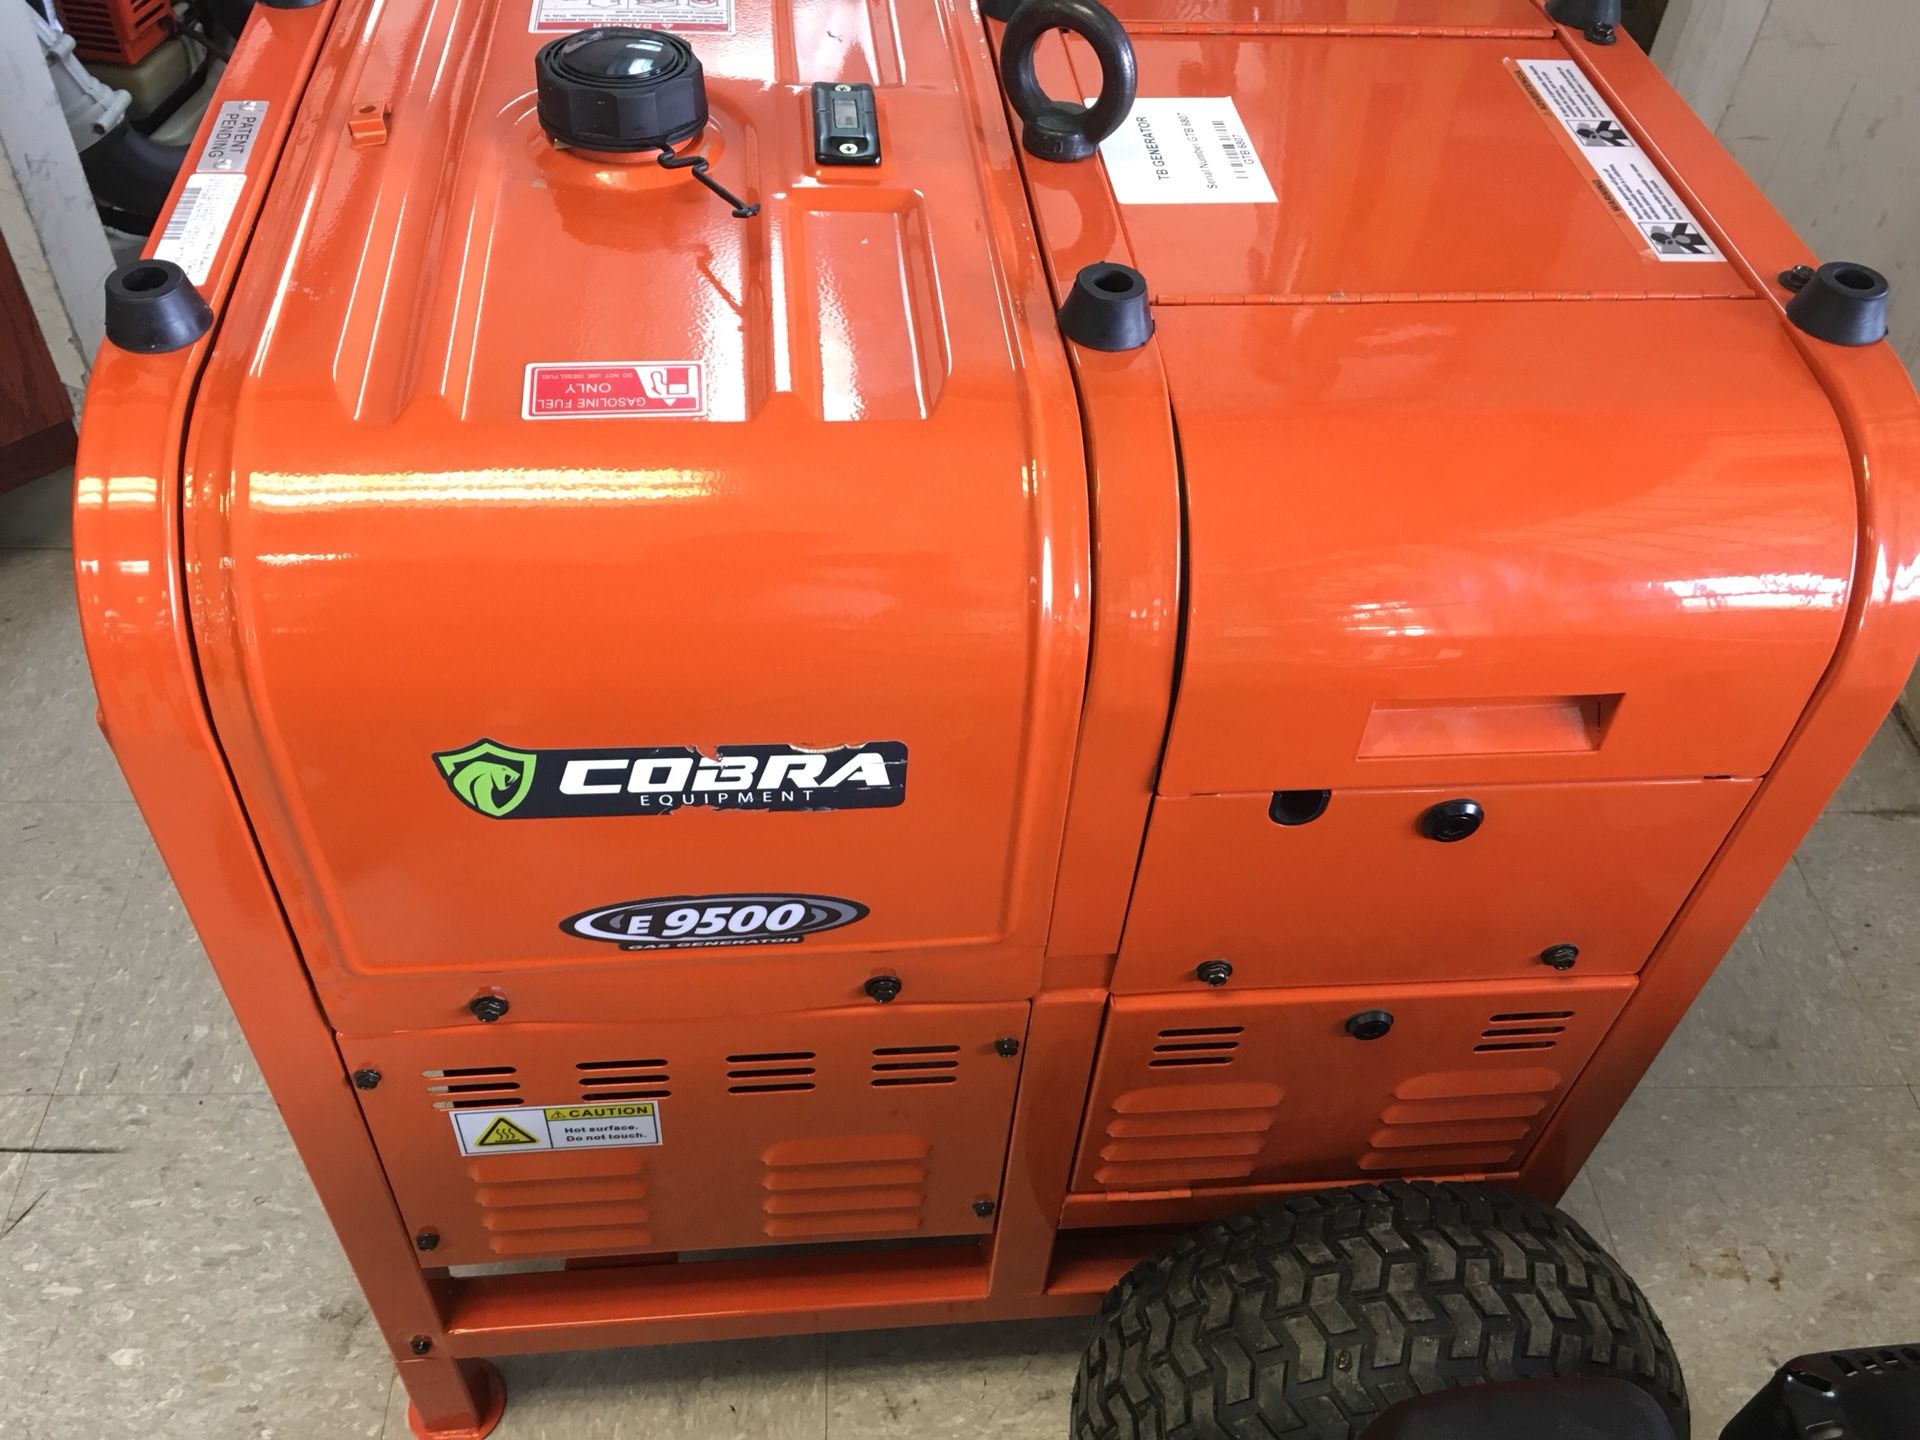 Cobra generator